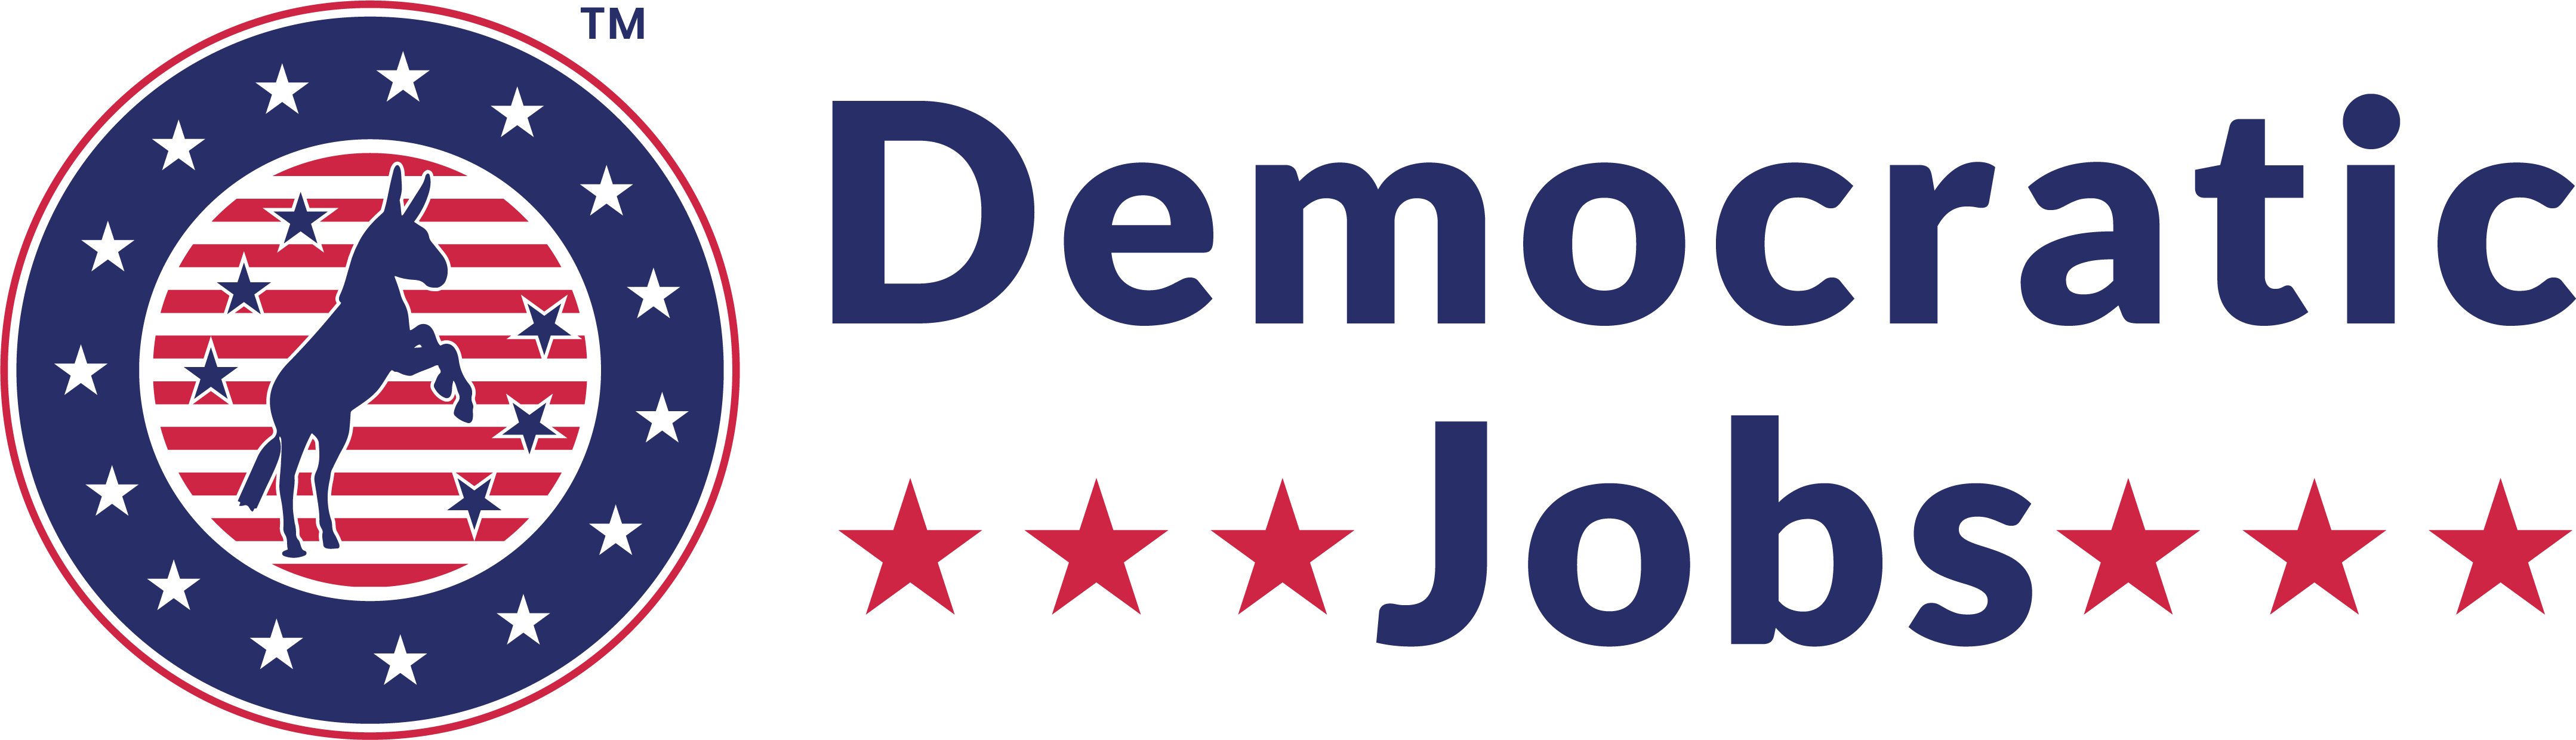 examples of democratic leadership jobs